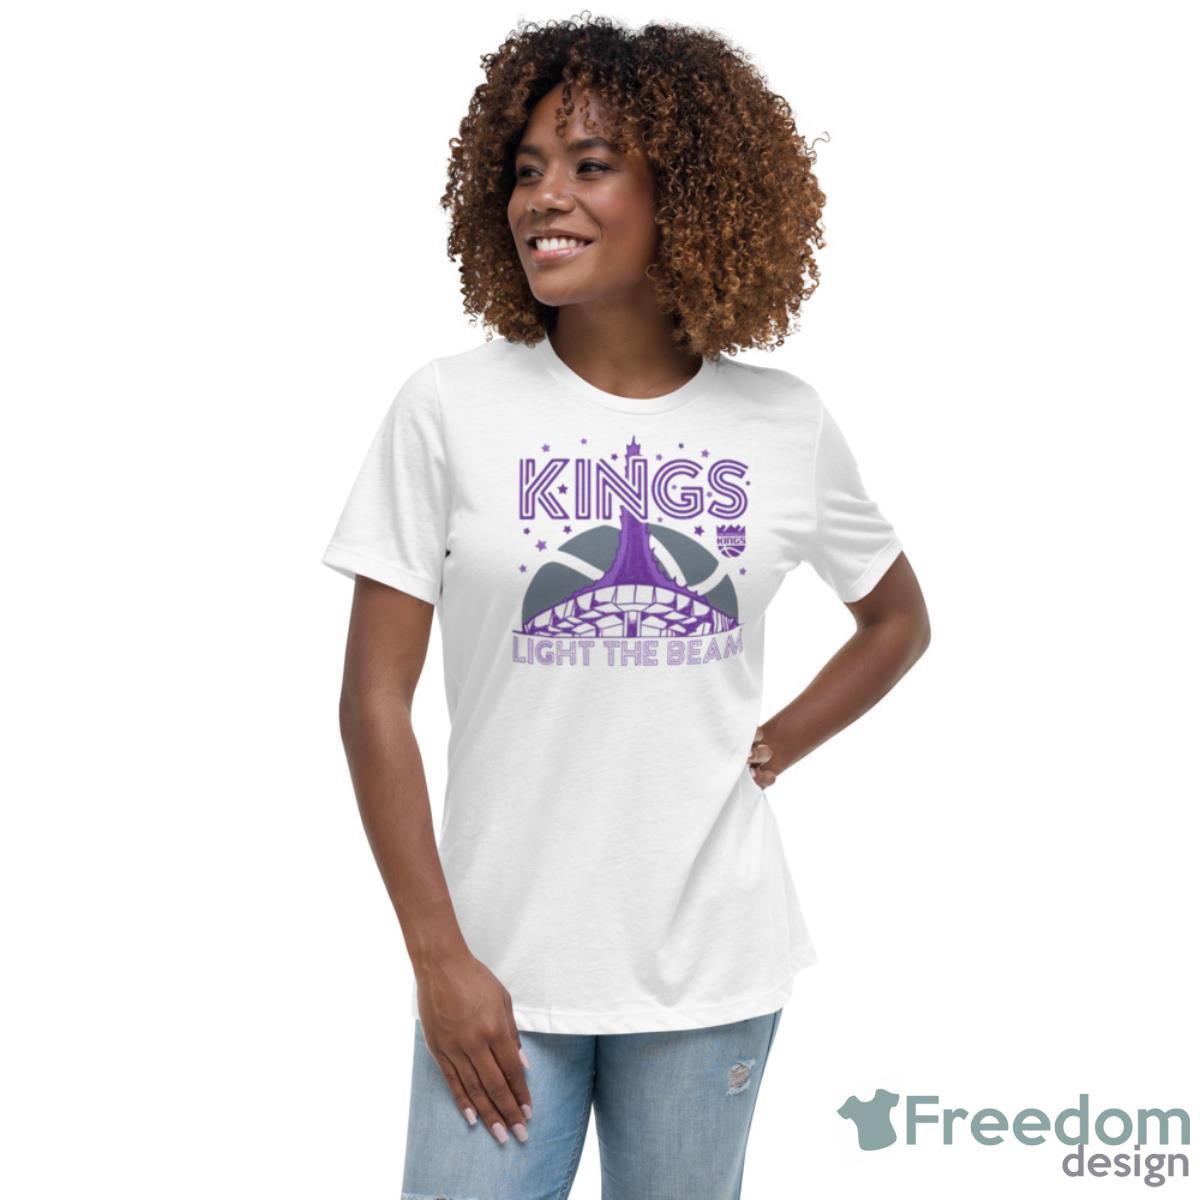 Sacramento Kings Logo Hoodie from Homage. | Royal Purple | Vintage Apparel from Homage.